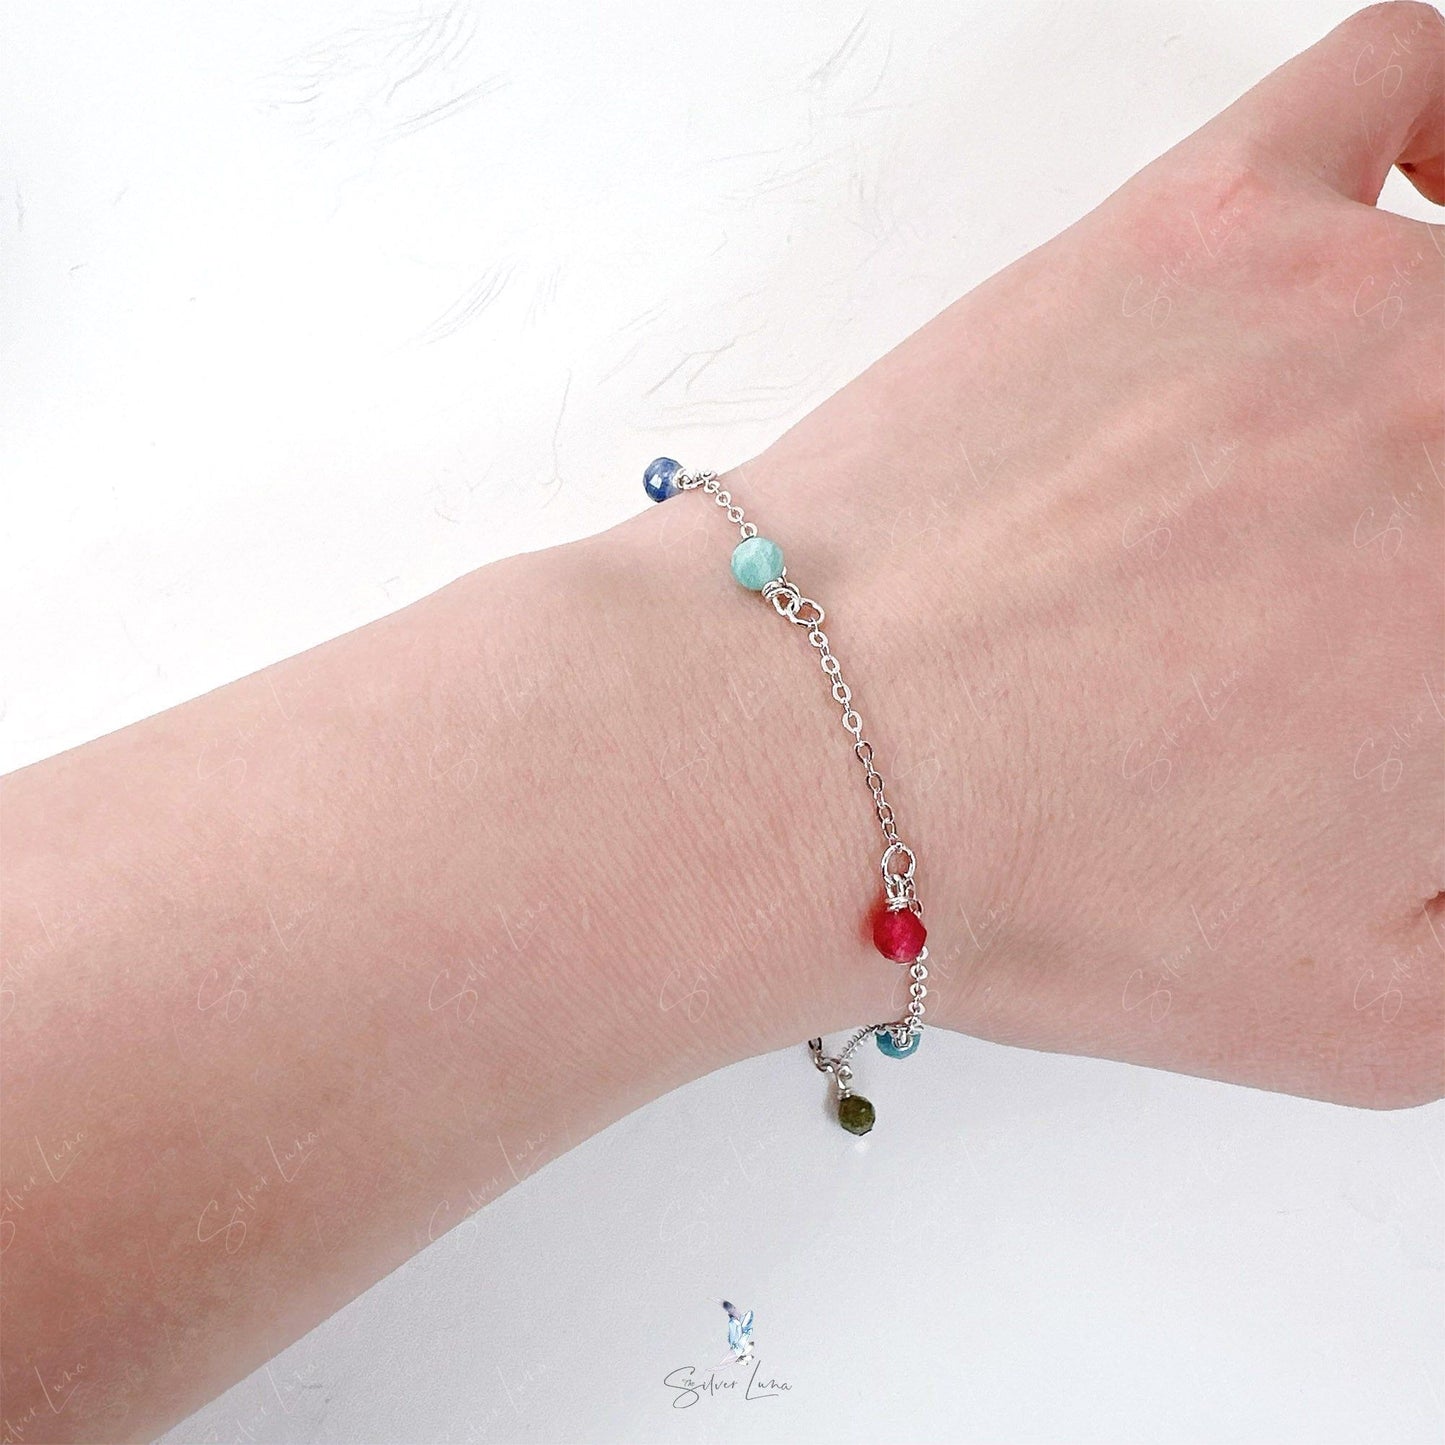 The seven chakra gemstone silver bracelet